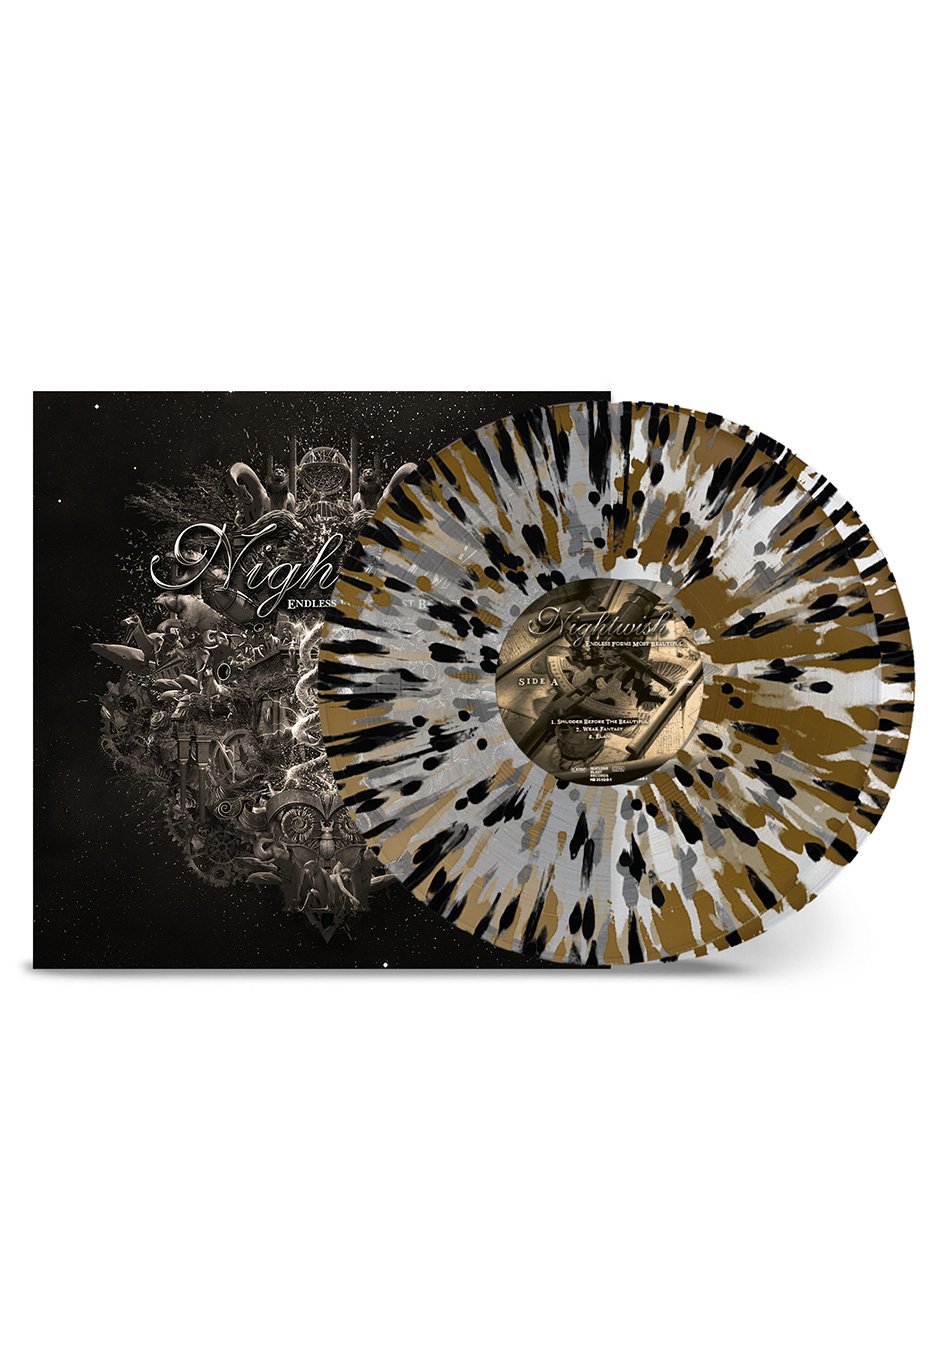 Nightwish - Endless Forms Most Beautiful Clear/Gold Ltd. - Splatter 2 Vinyl